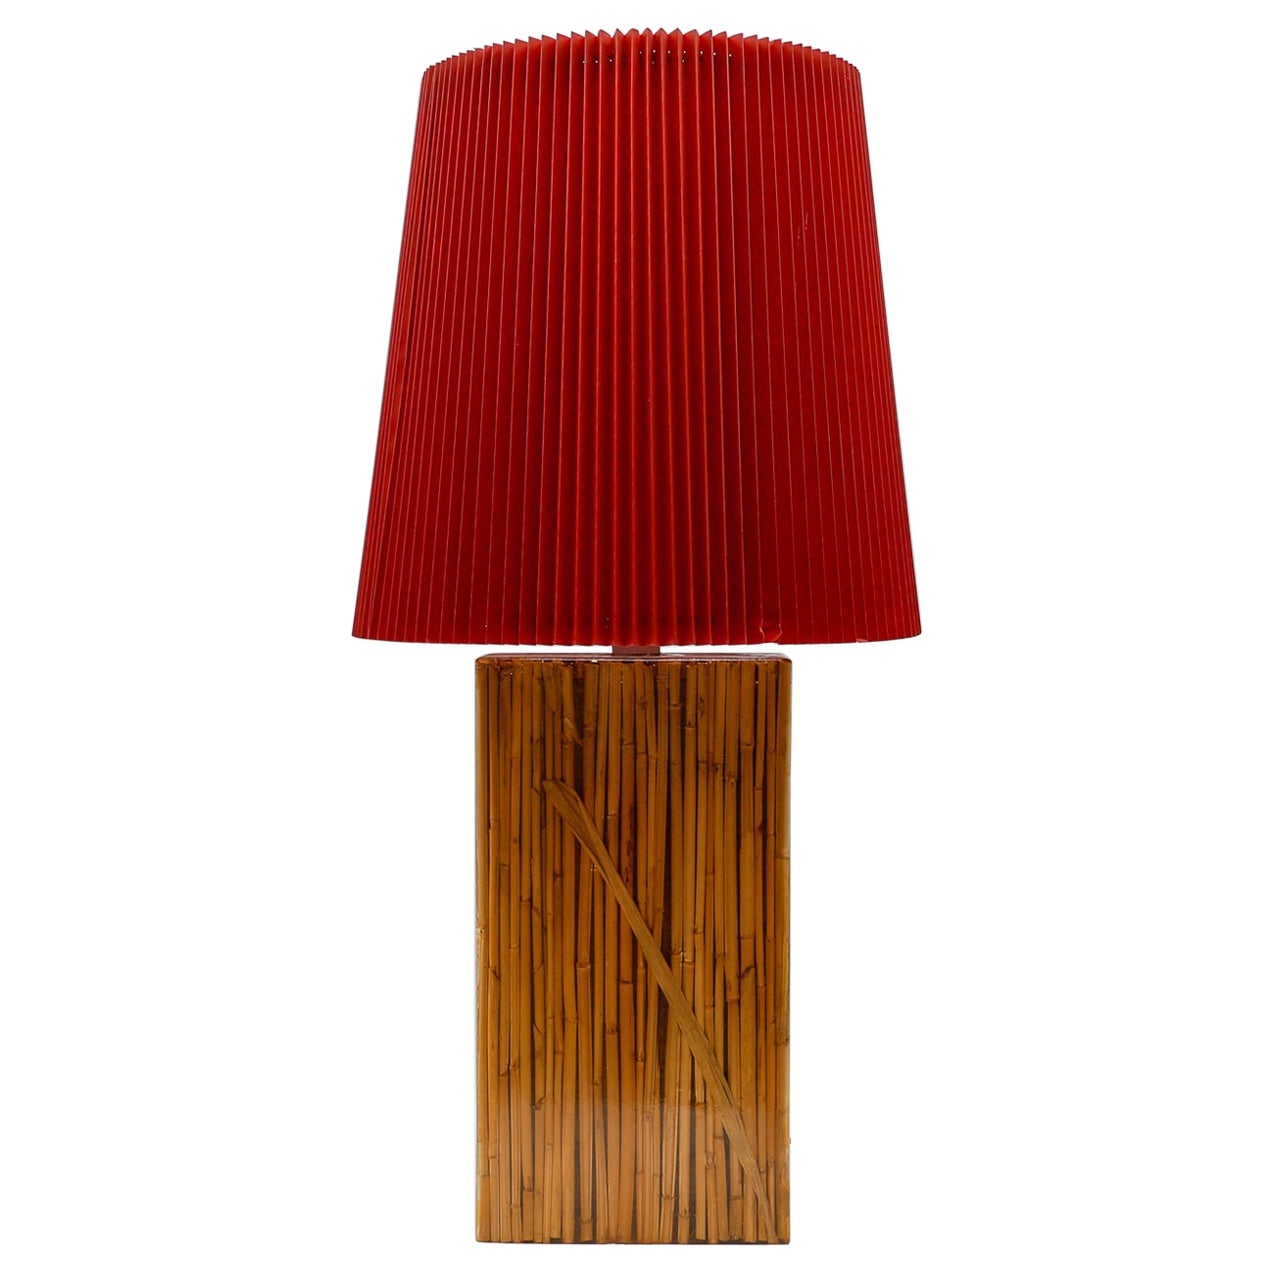 Large Riccardo Marzi Bamboo Resin Table Lamp, 1970s Italy